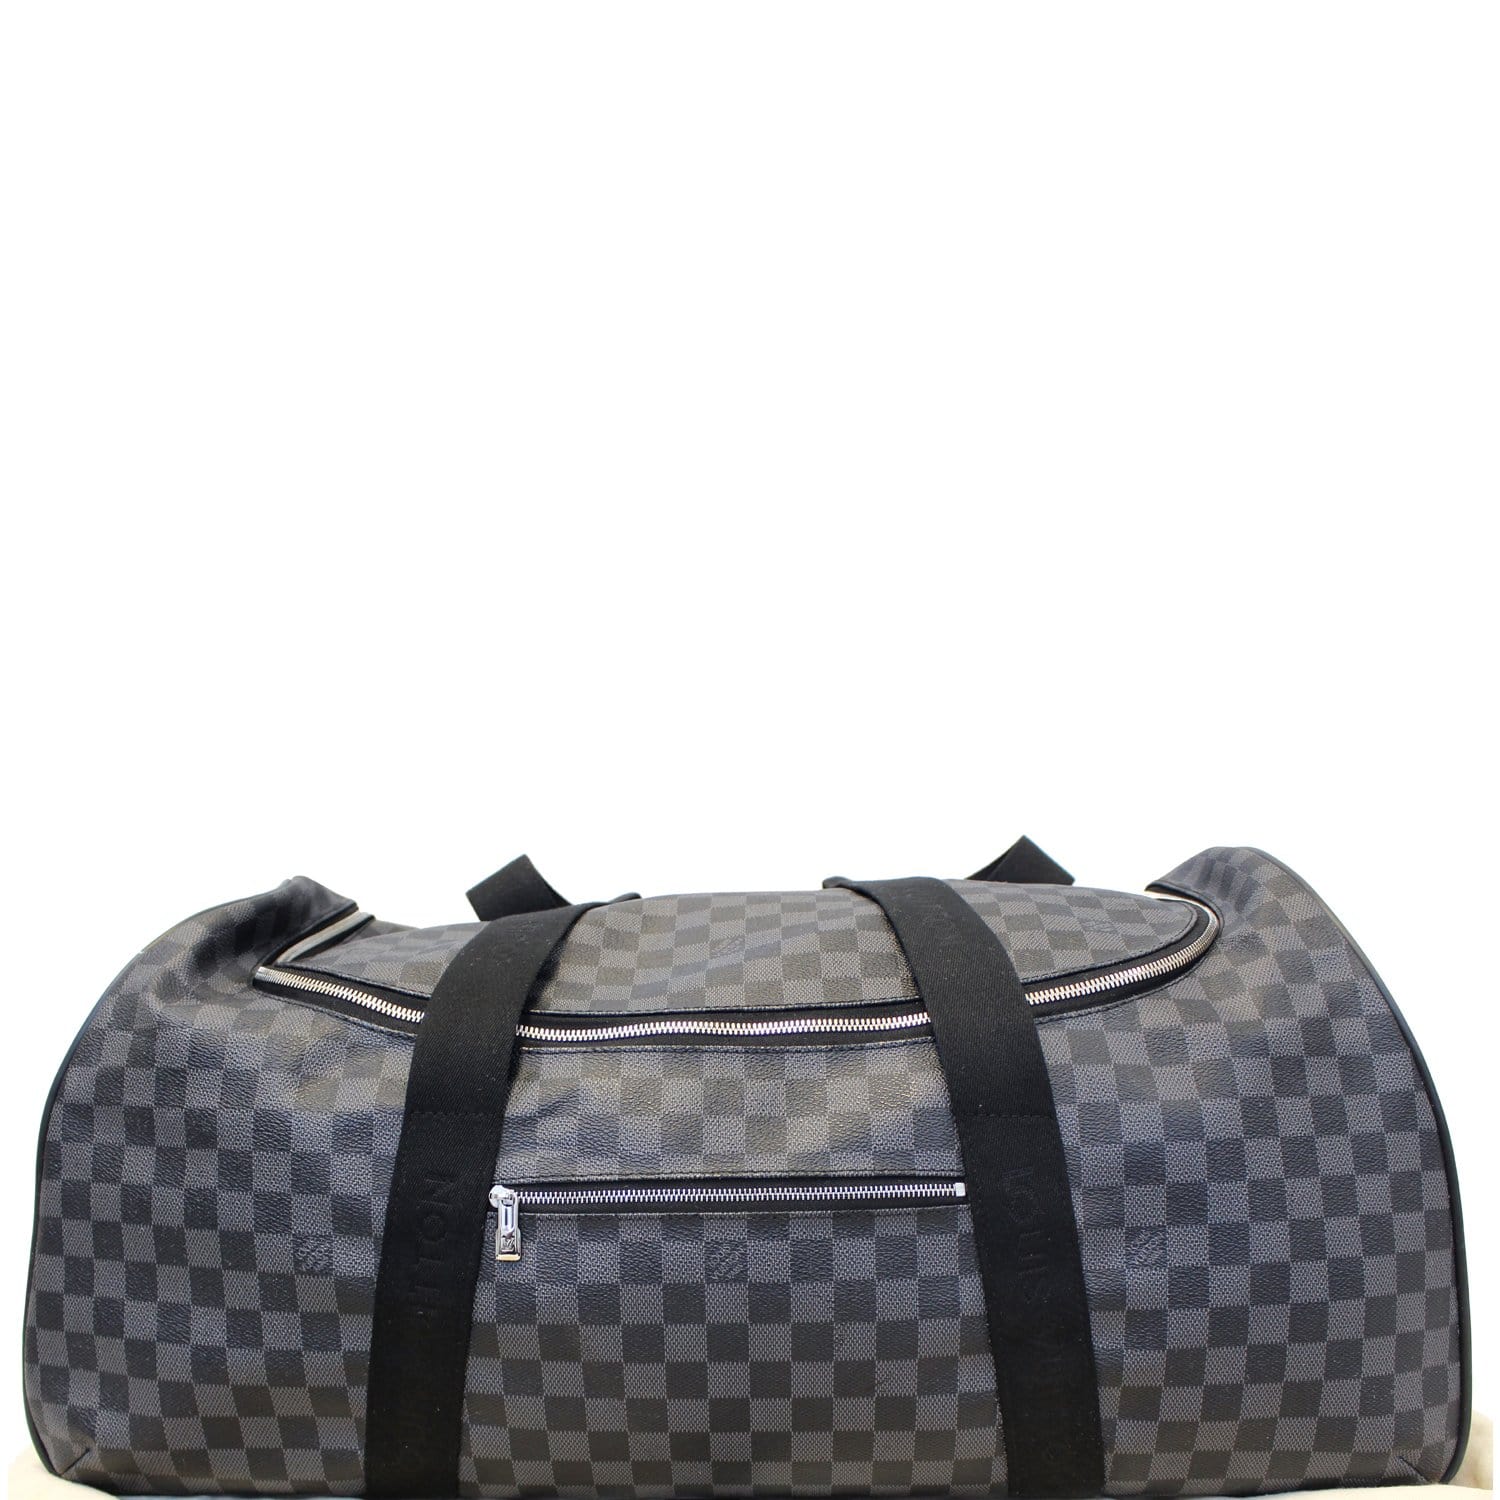 Louis Vuitton, Other, Monogram Luggage Bag Neo Eole 65